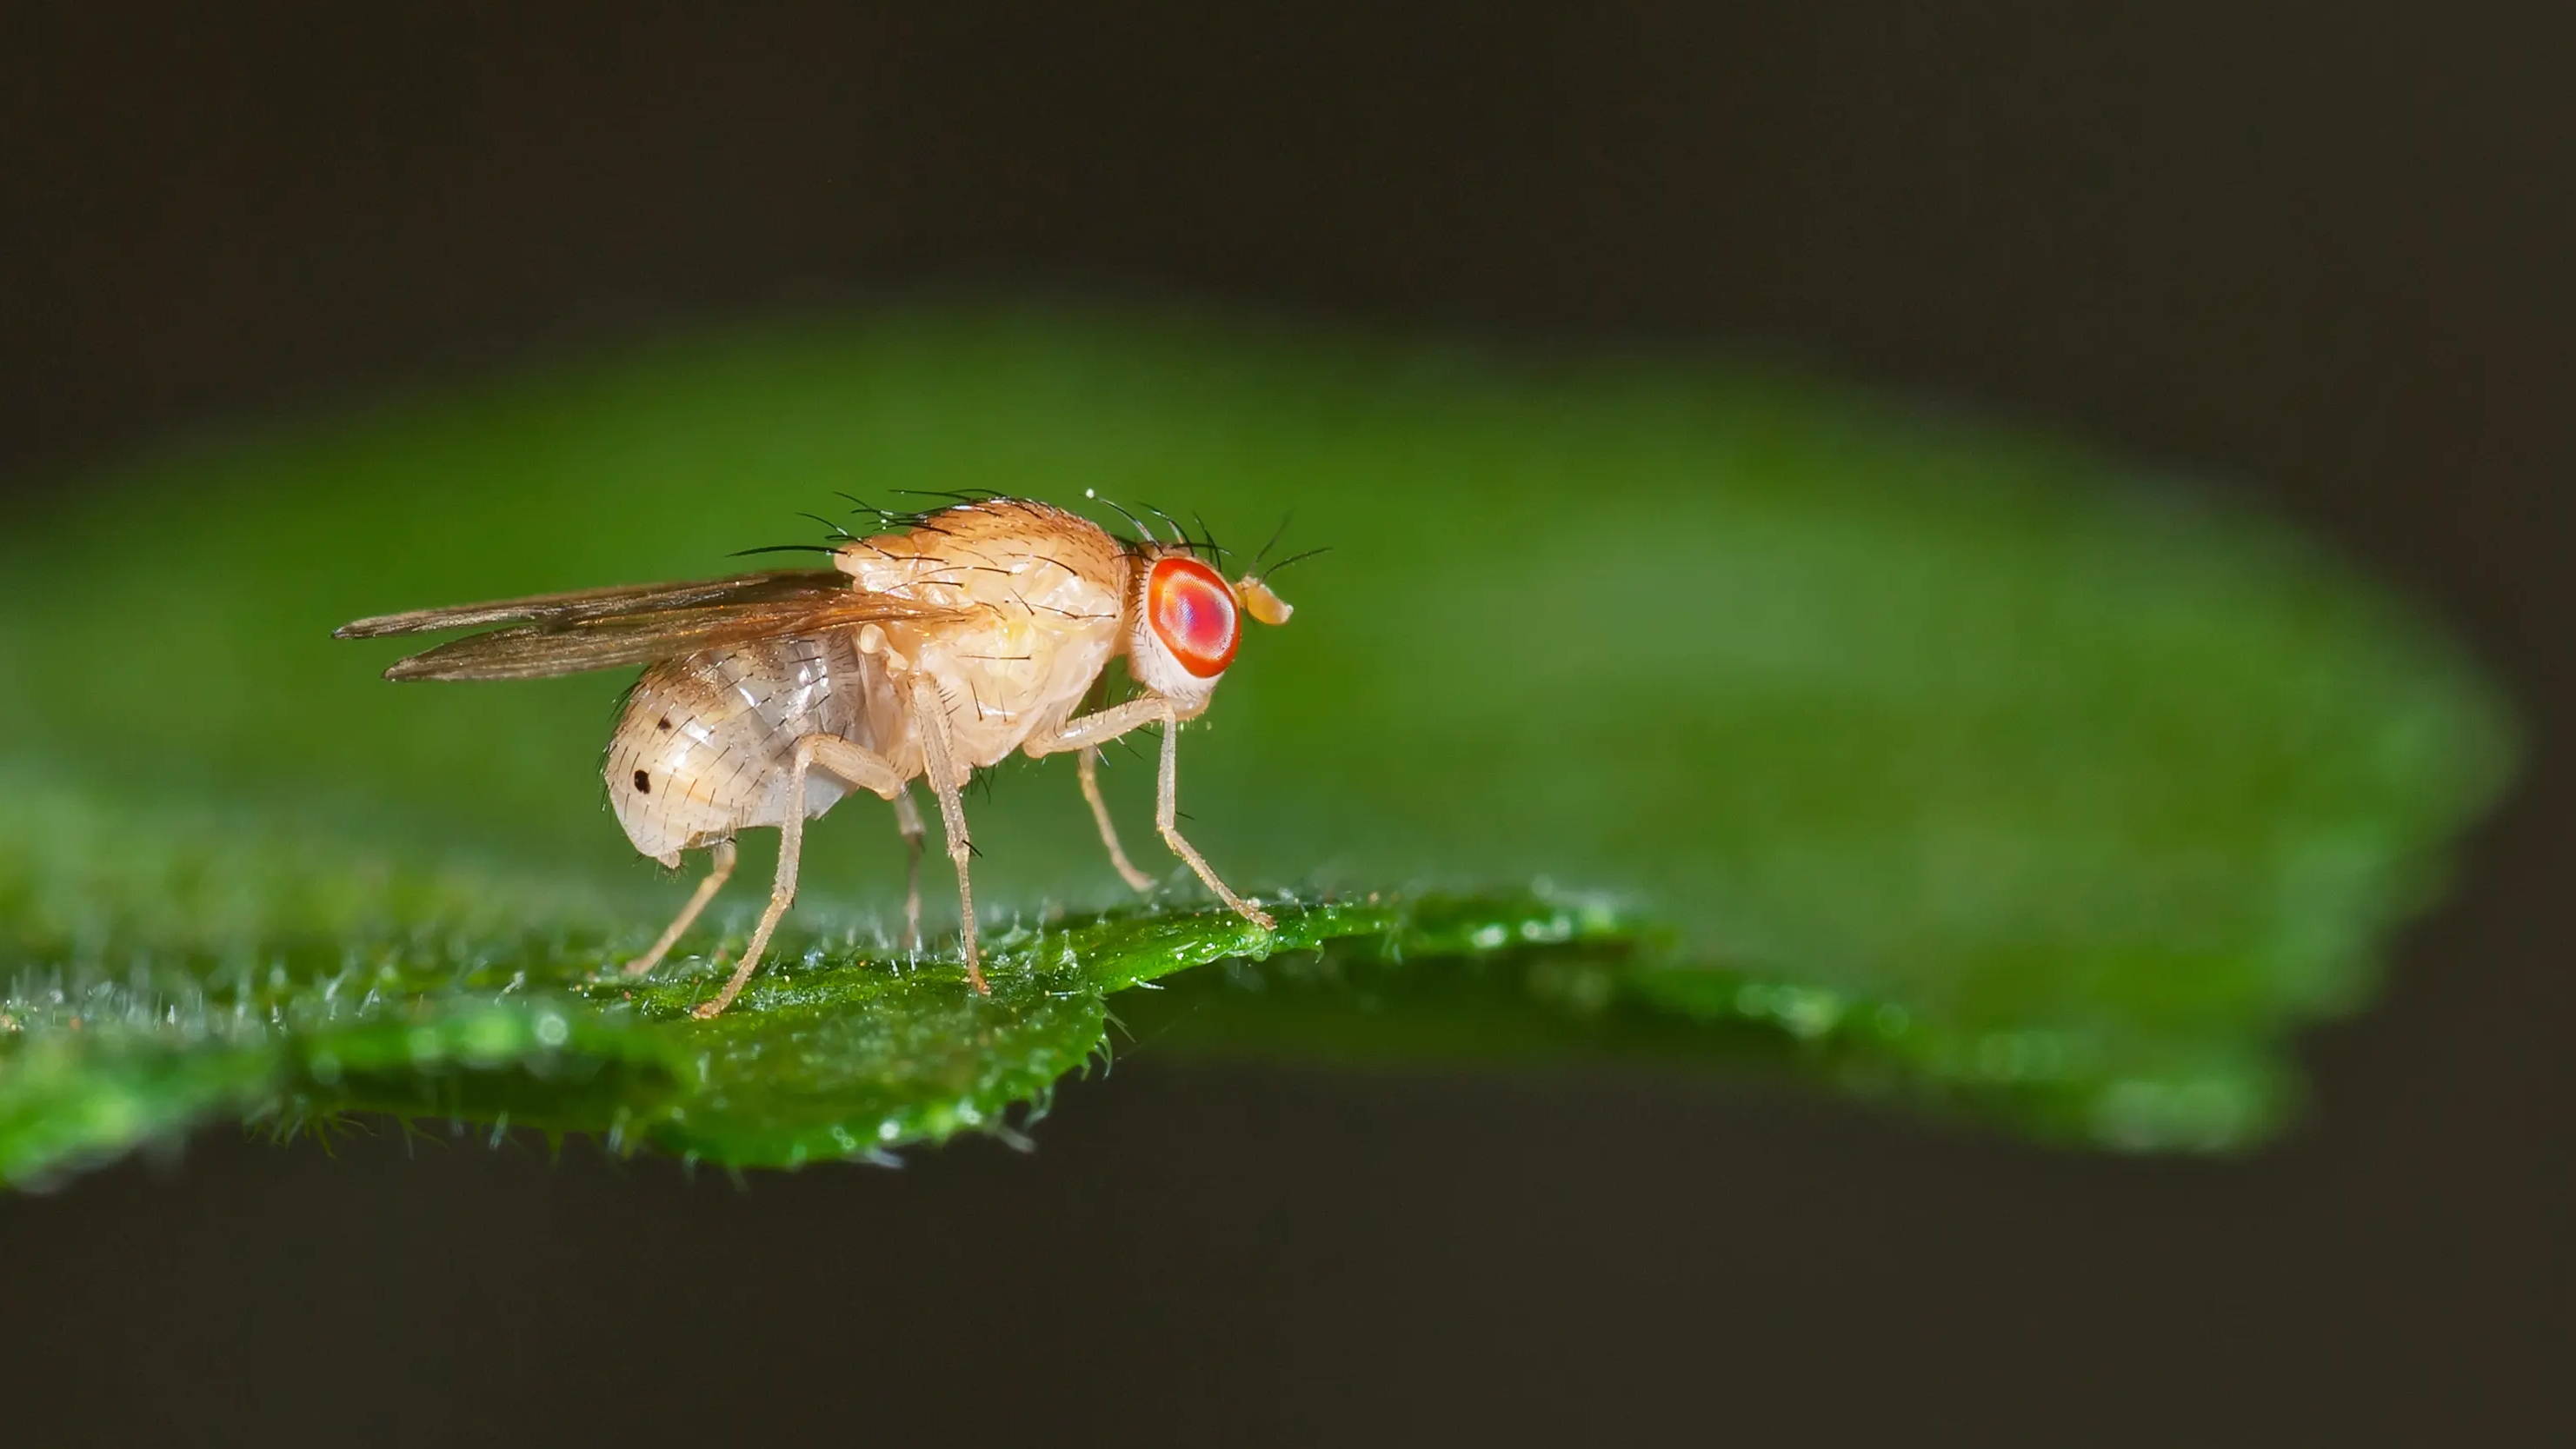 Future Fields fruit fly biotechnology EntoEngine